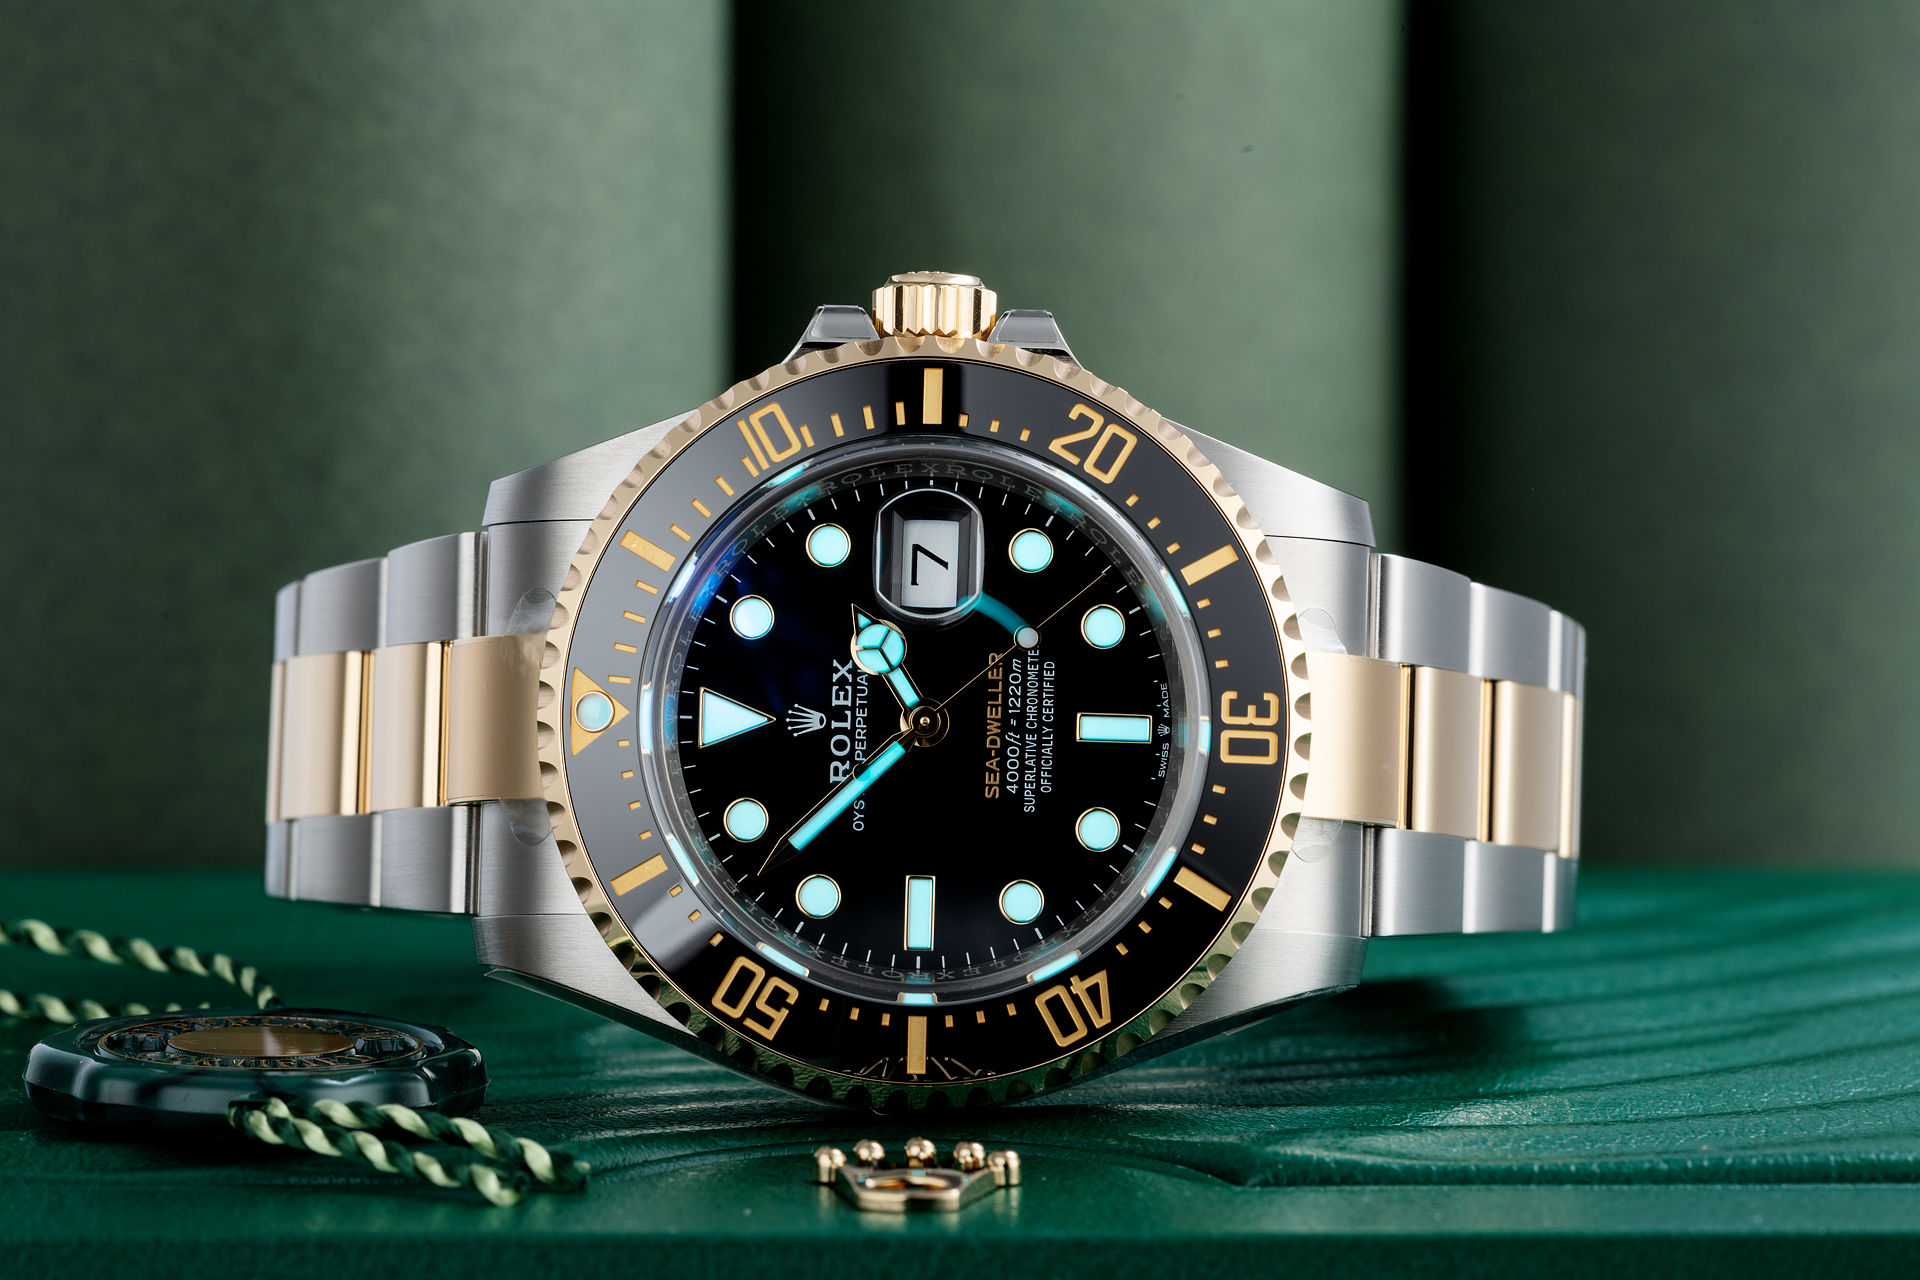 ref 126603 | 'Brand New' 5 Year Warranty | Rolex Sea-Dweller